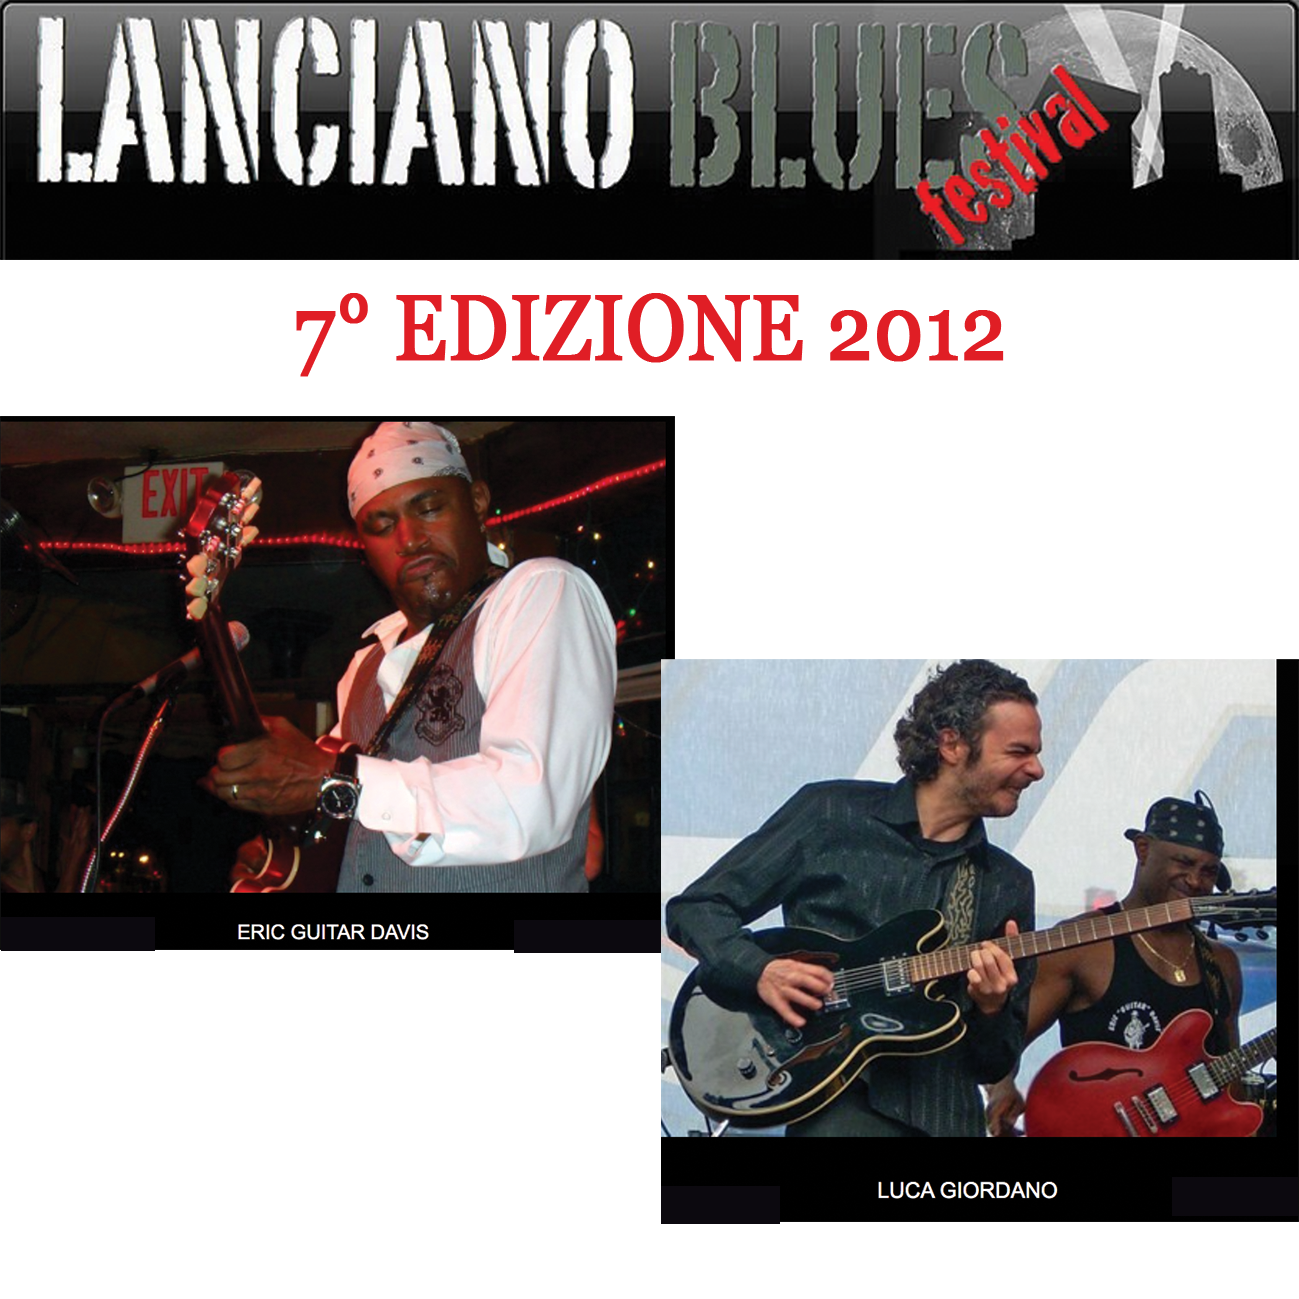 LANCIANO BLUES FESTIVAL 2012